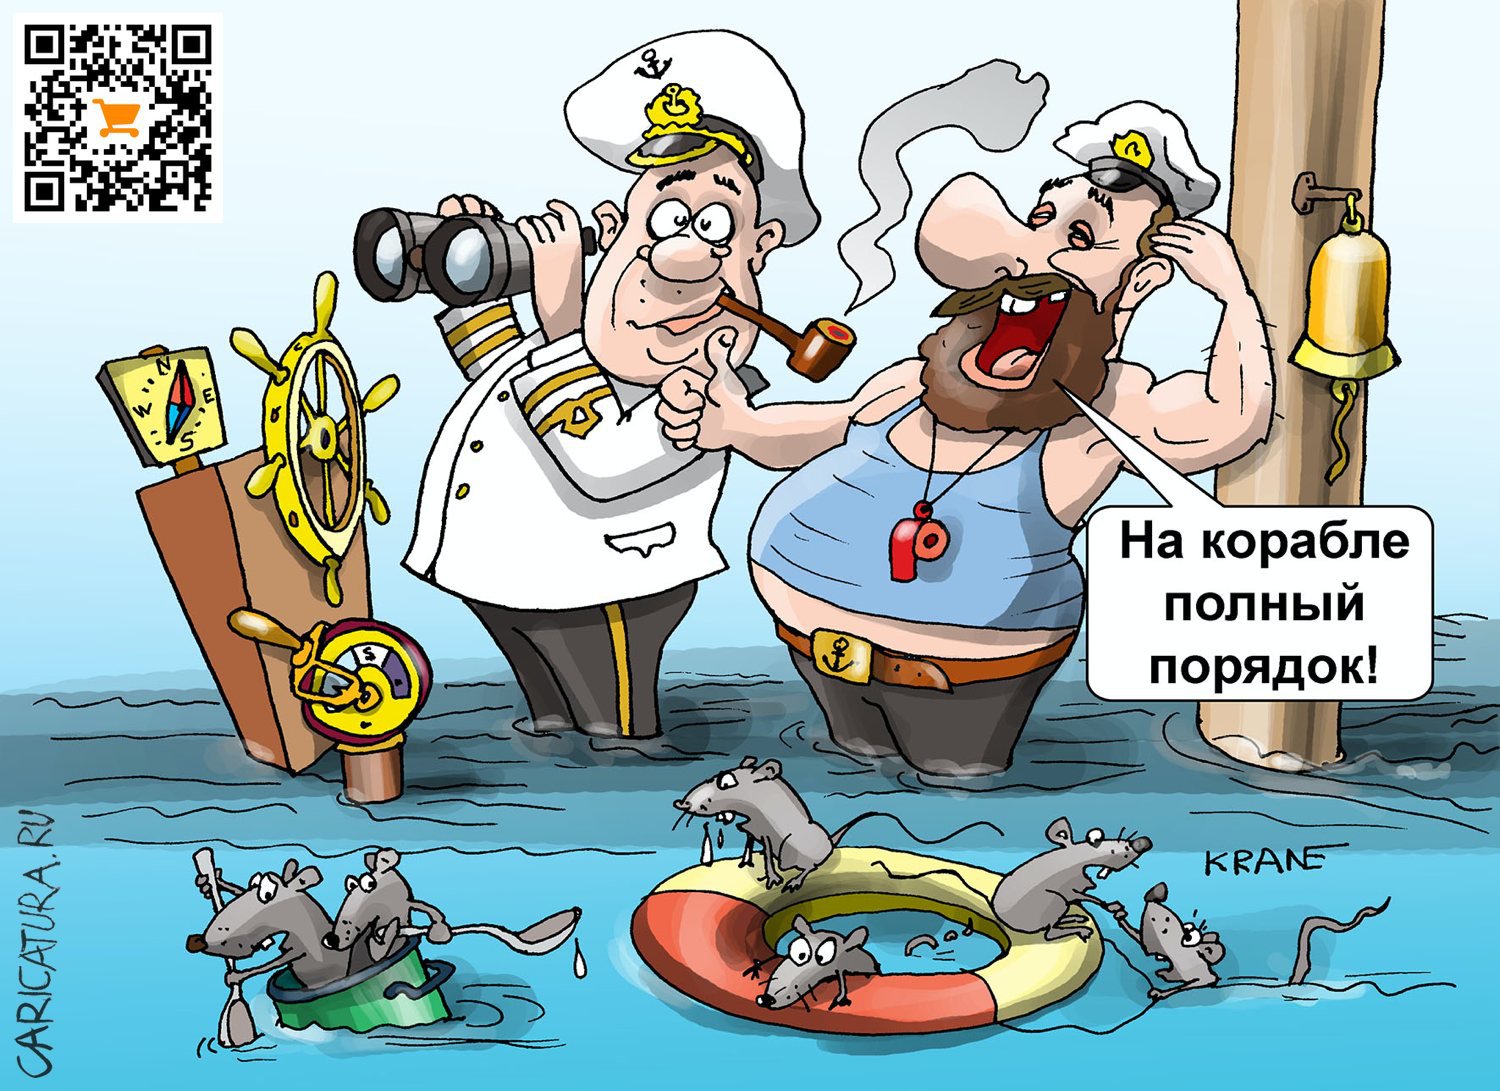 Карикатура "Капитан на крыс не смотрит", Евгений Кран